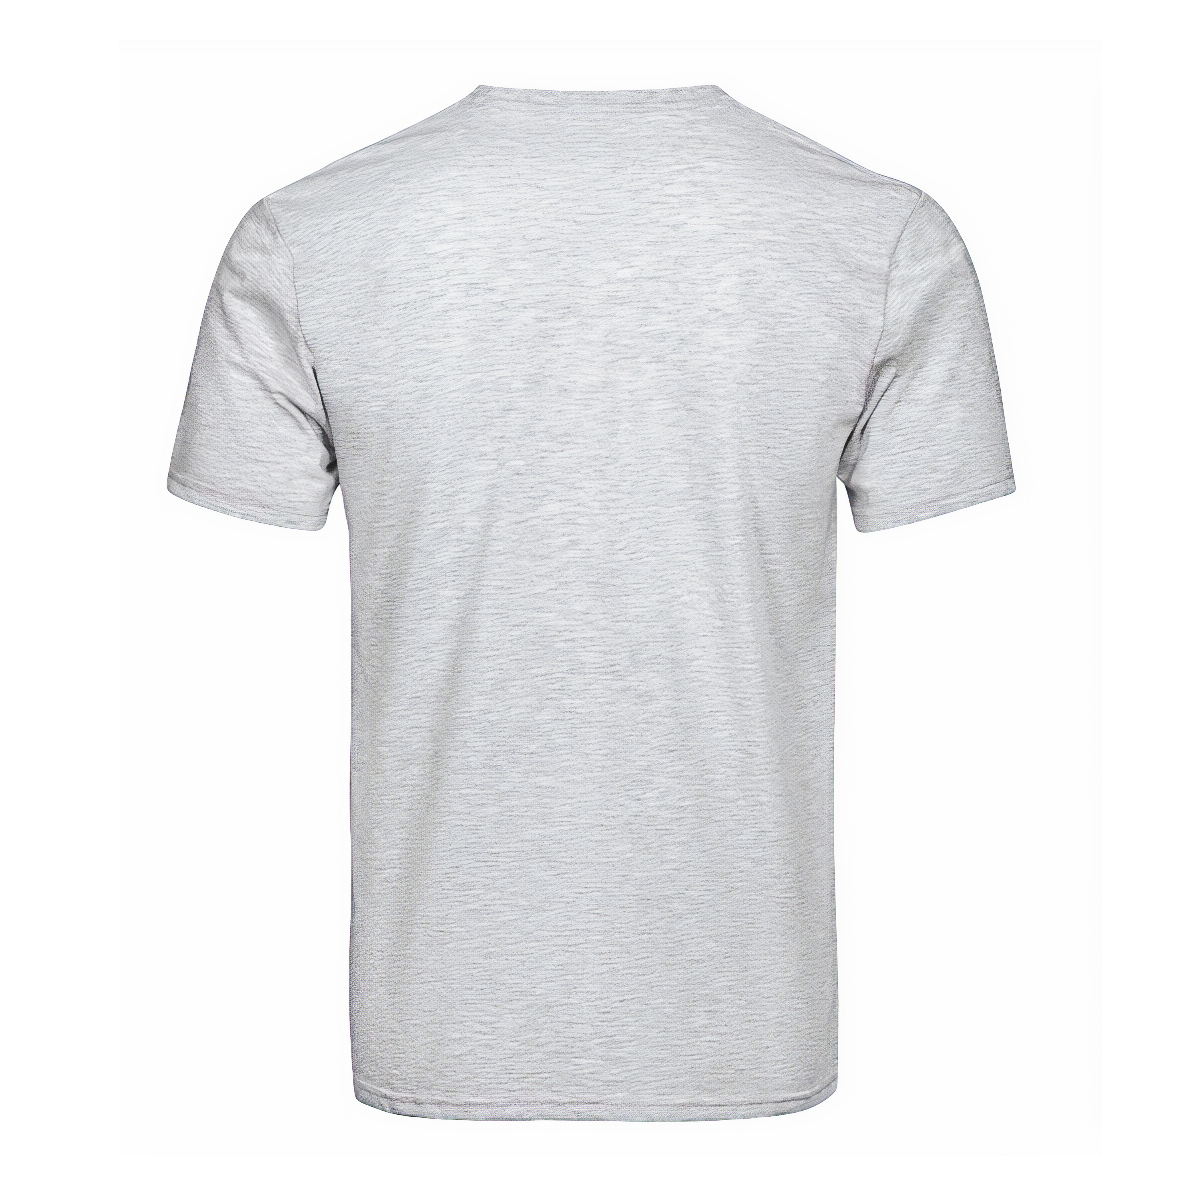 Kerr Ancient Tartan Crest T-shirt - I'm not yelling style